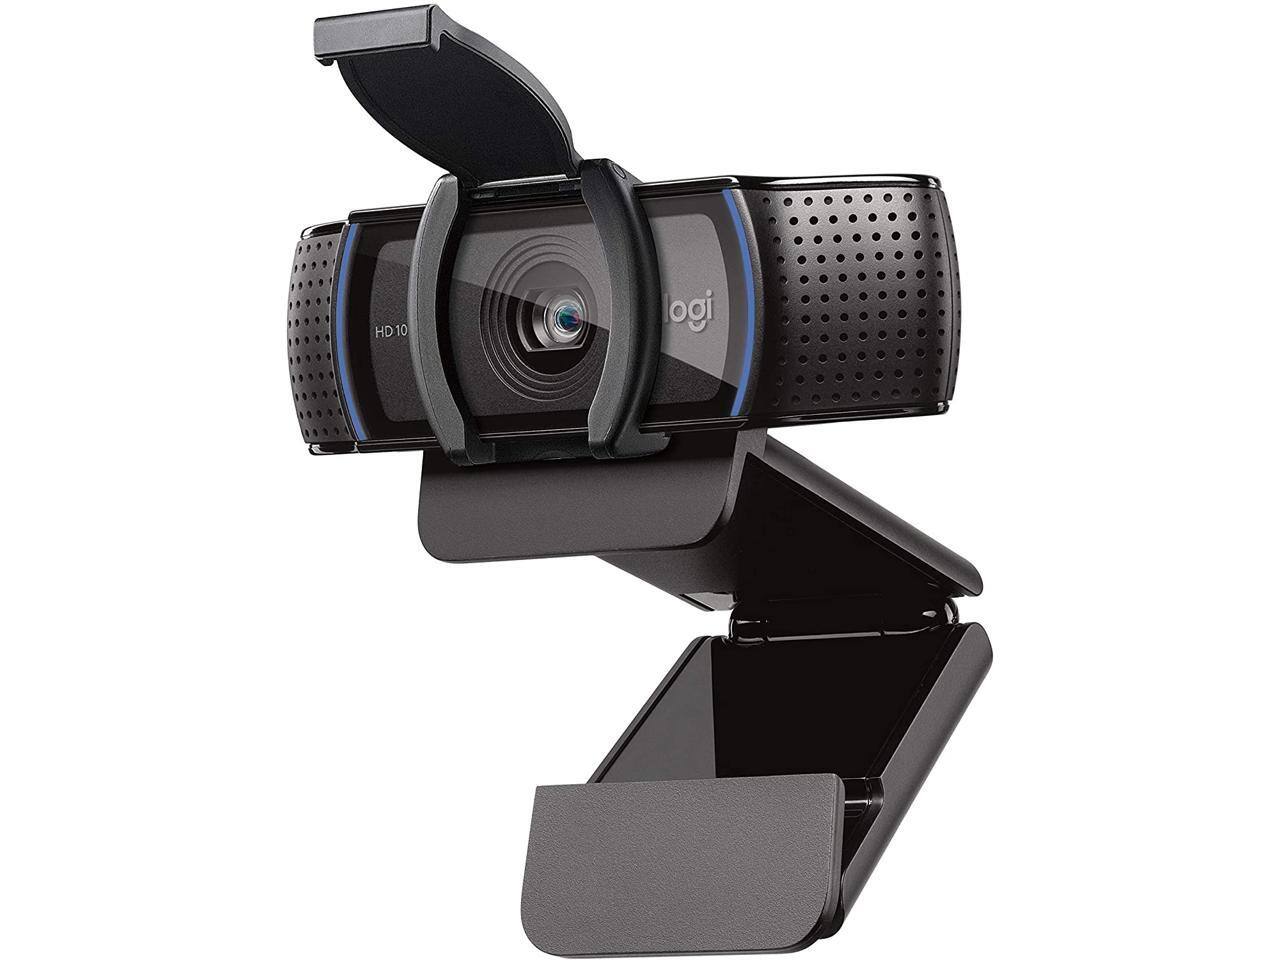 Logitech C920e Business Webcam 1080P HD (2nd Generation) - Mobile Only deal $55